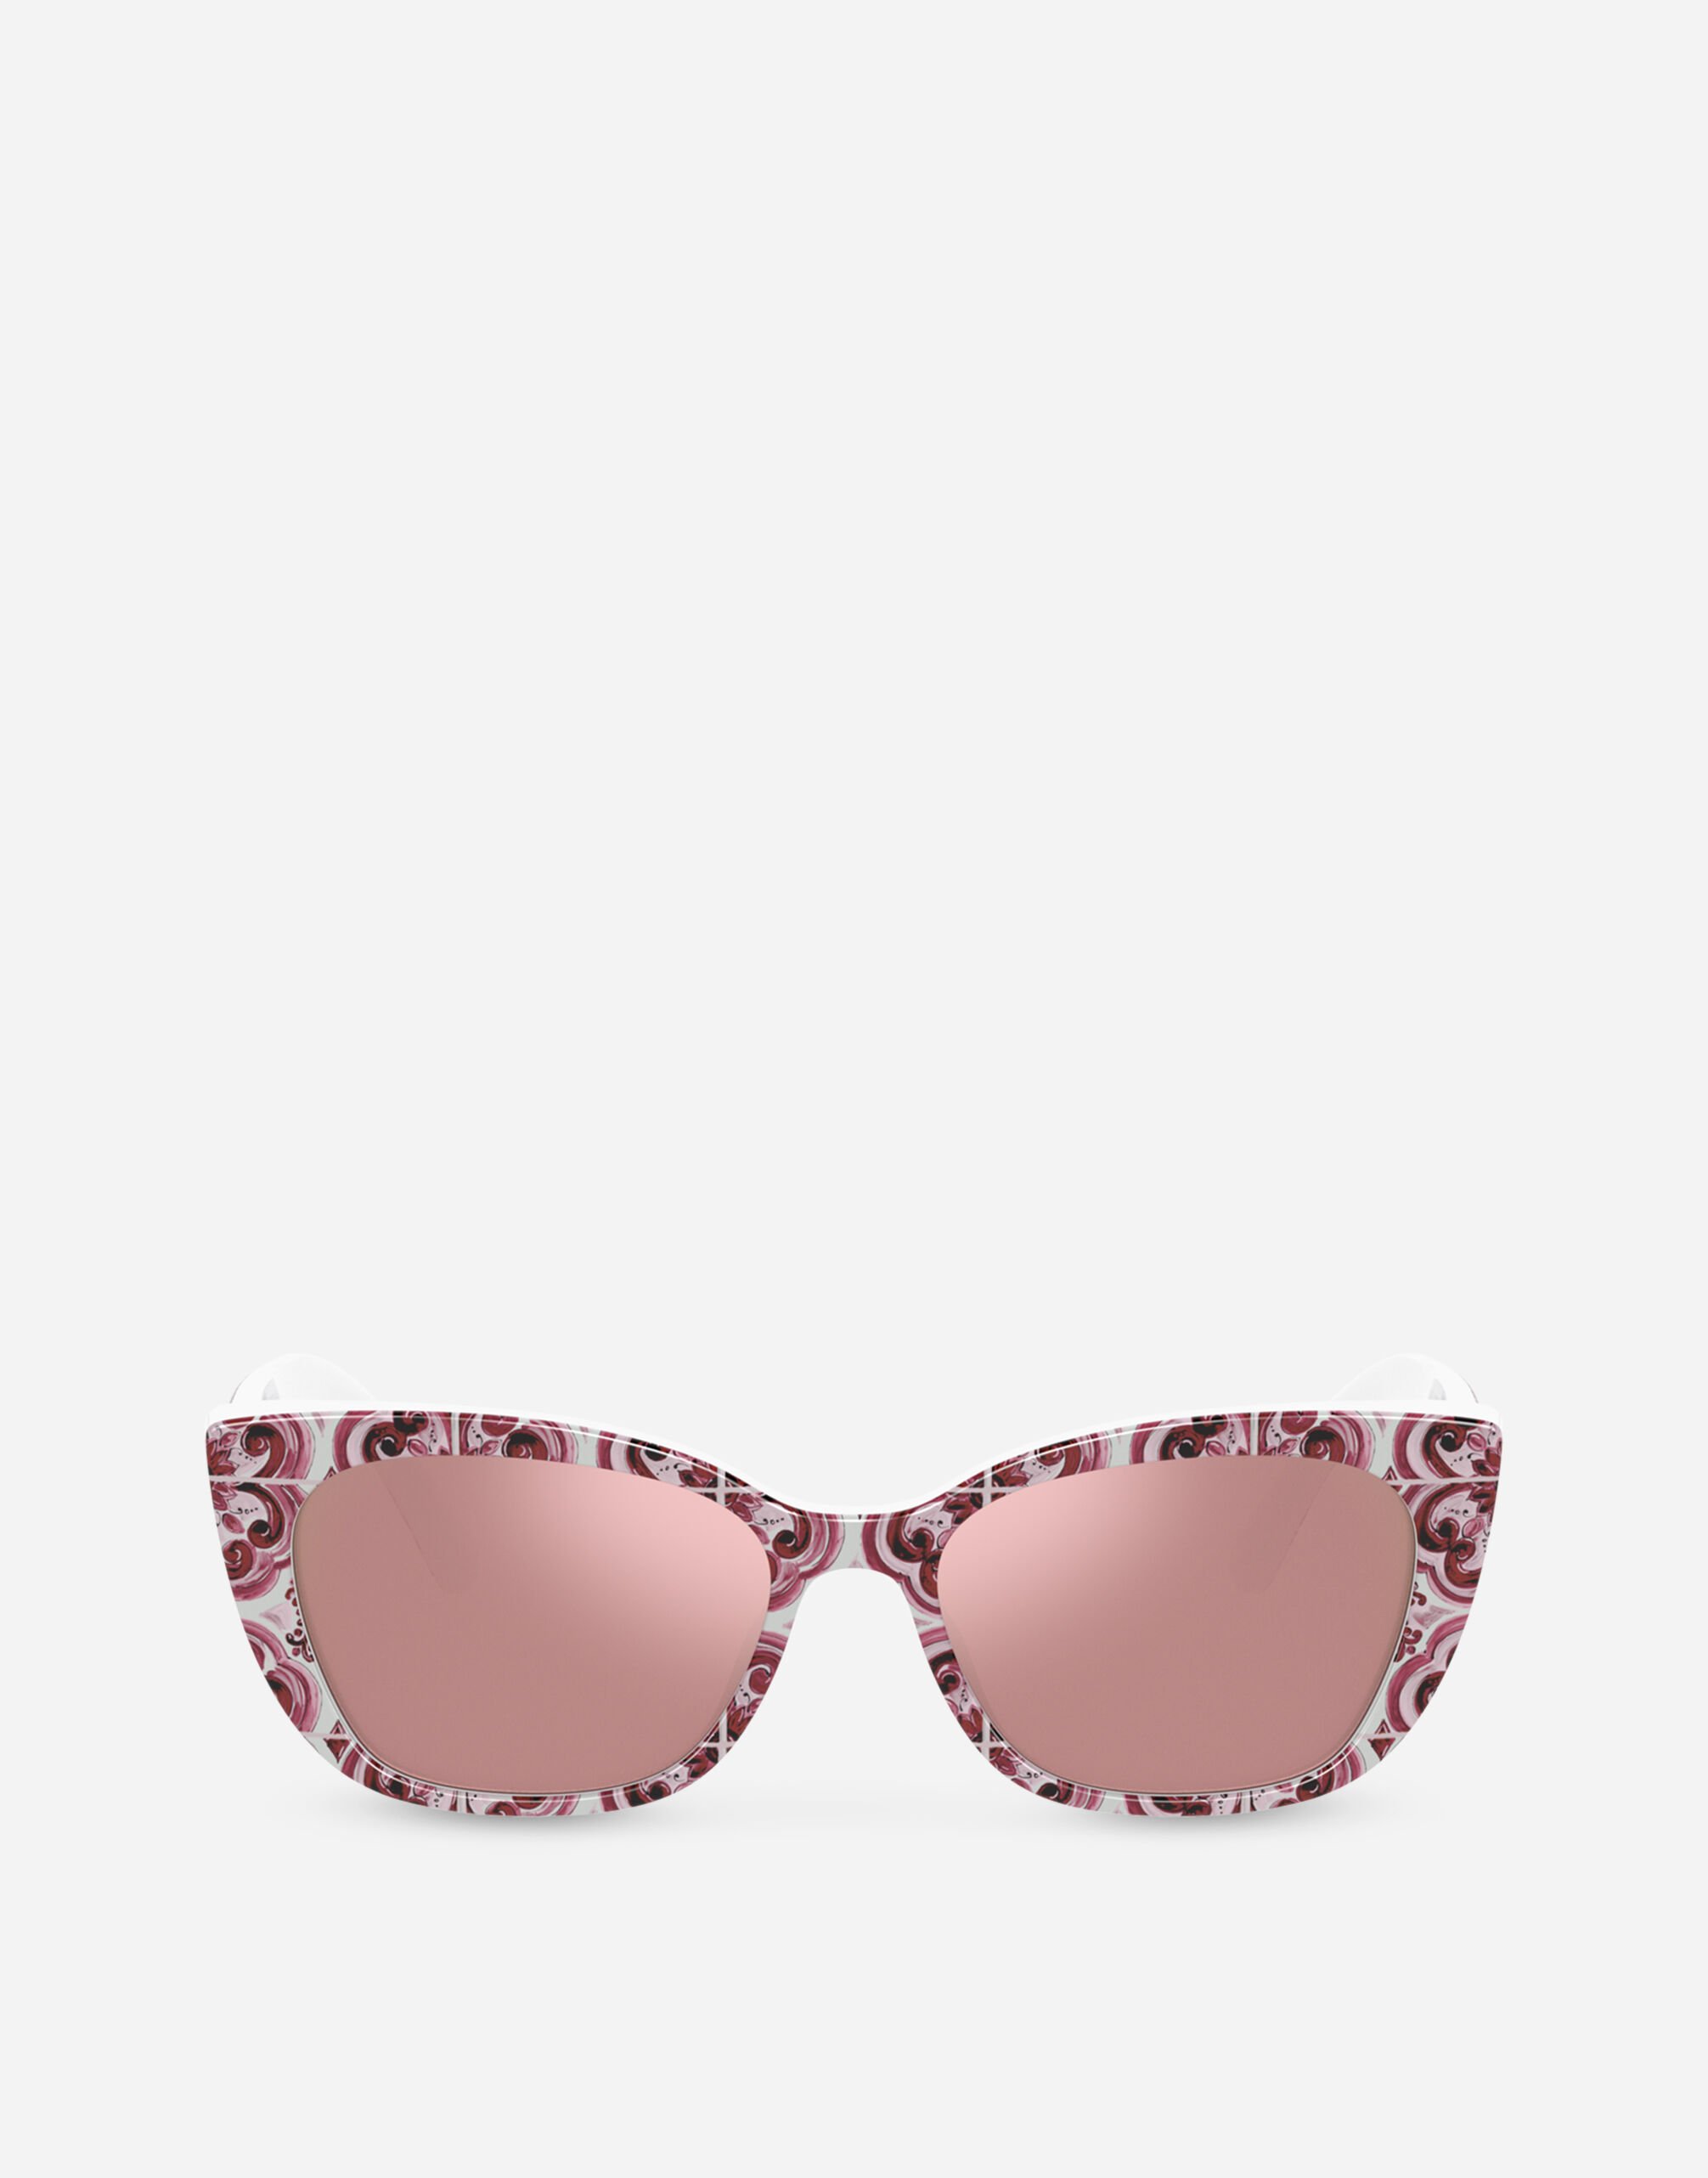 Dolce & Gabbana Maiolica Fucsia Sunglasses Pink VG600JVN51Z